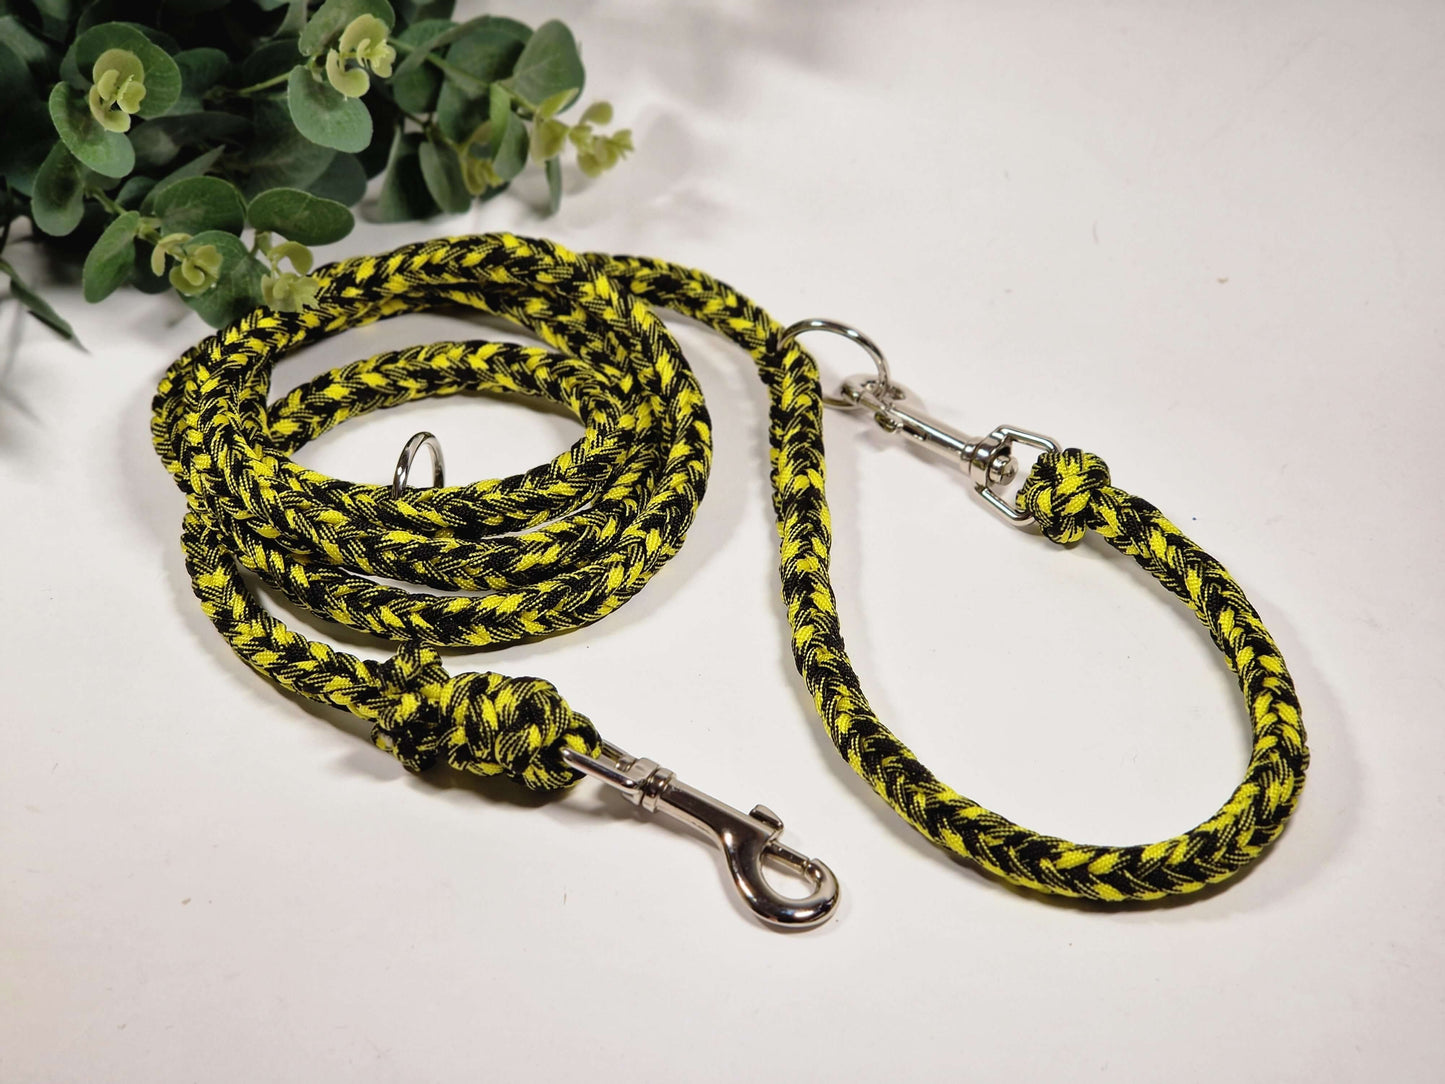 Paracord braided dog leash 2m - bee